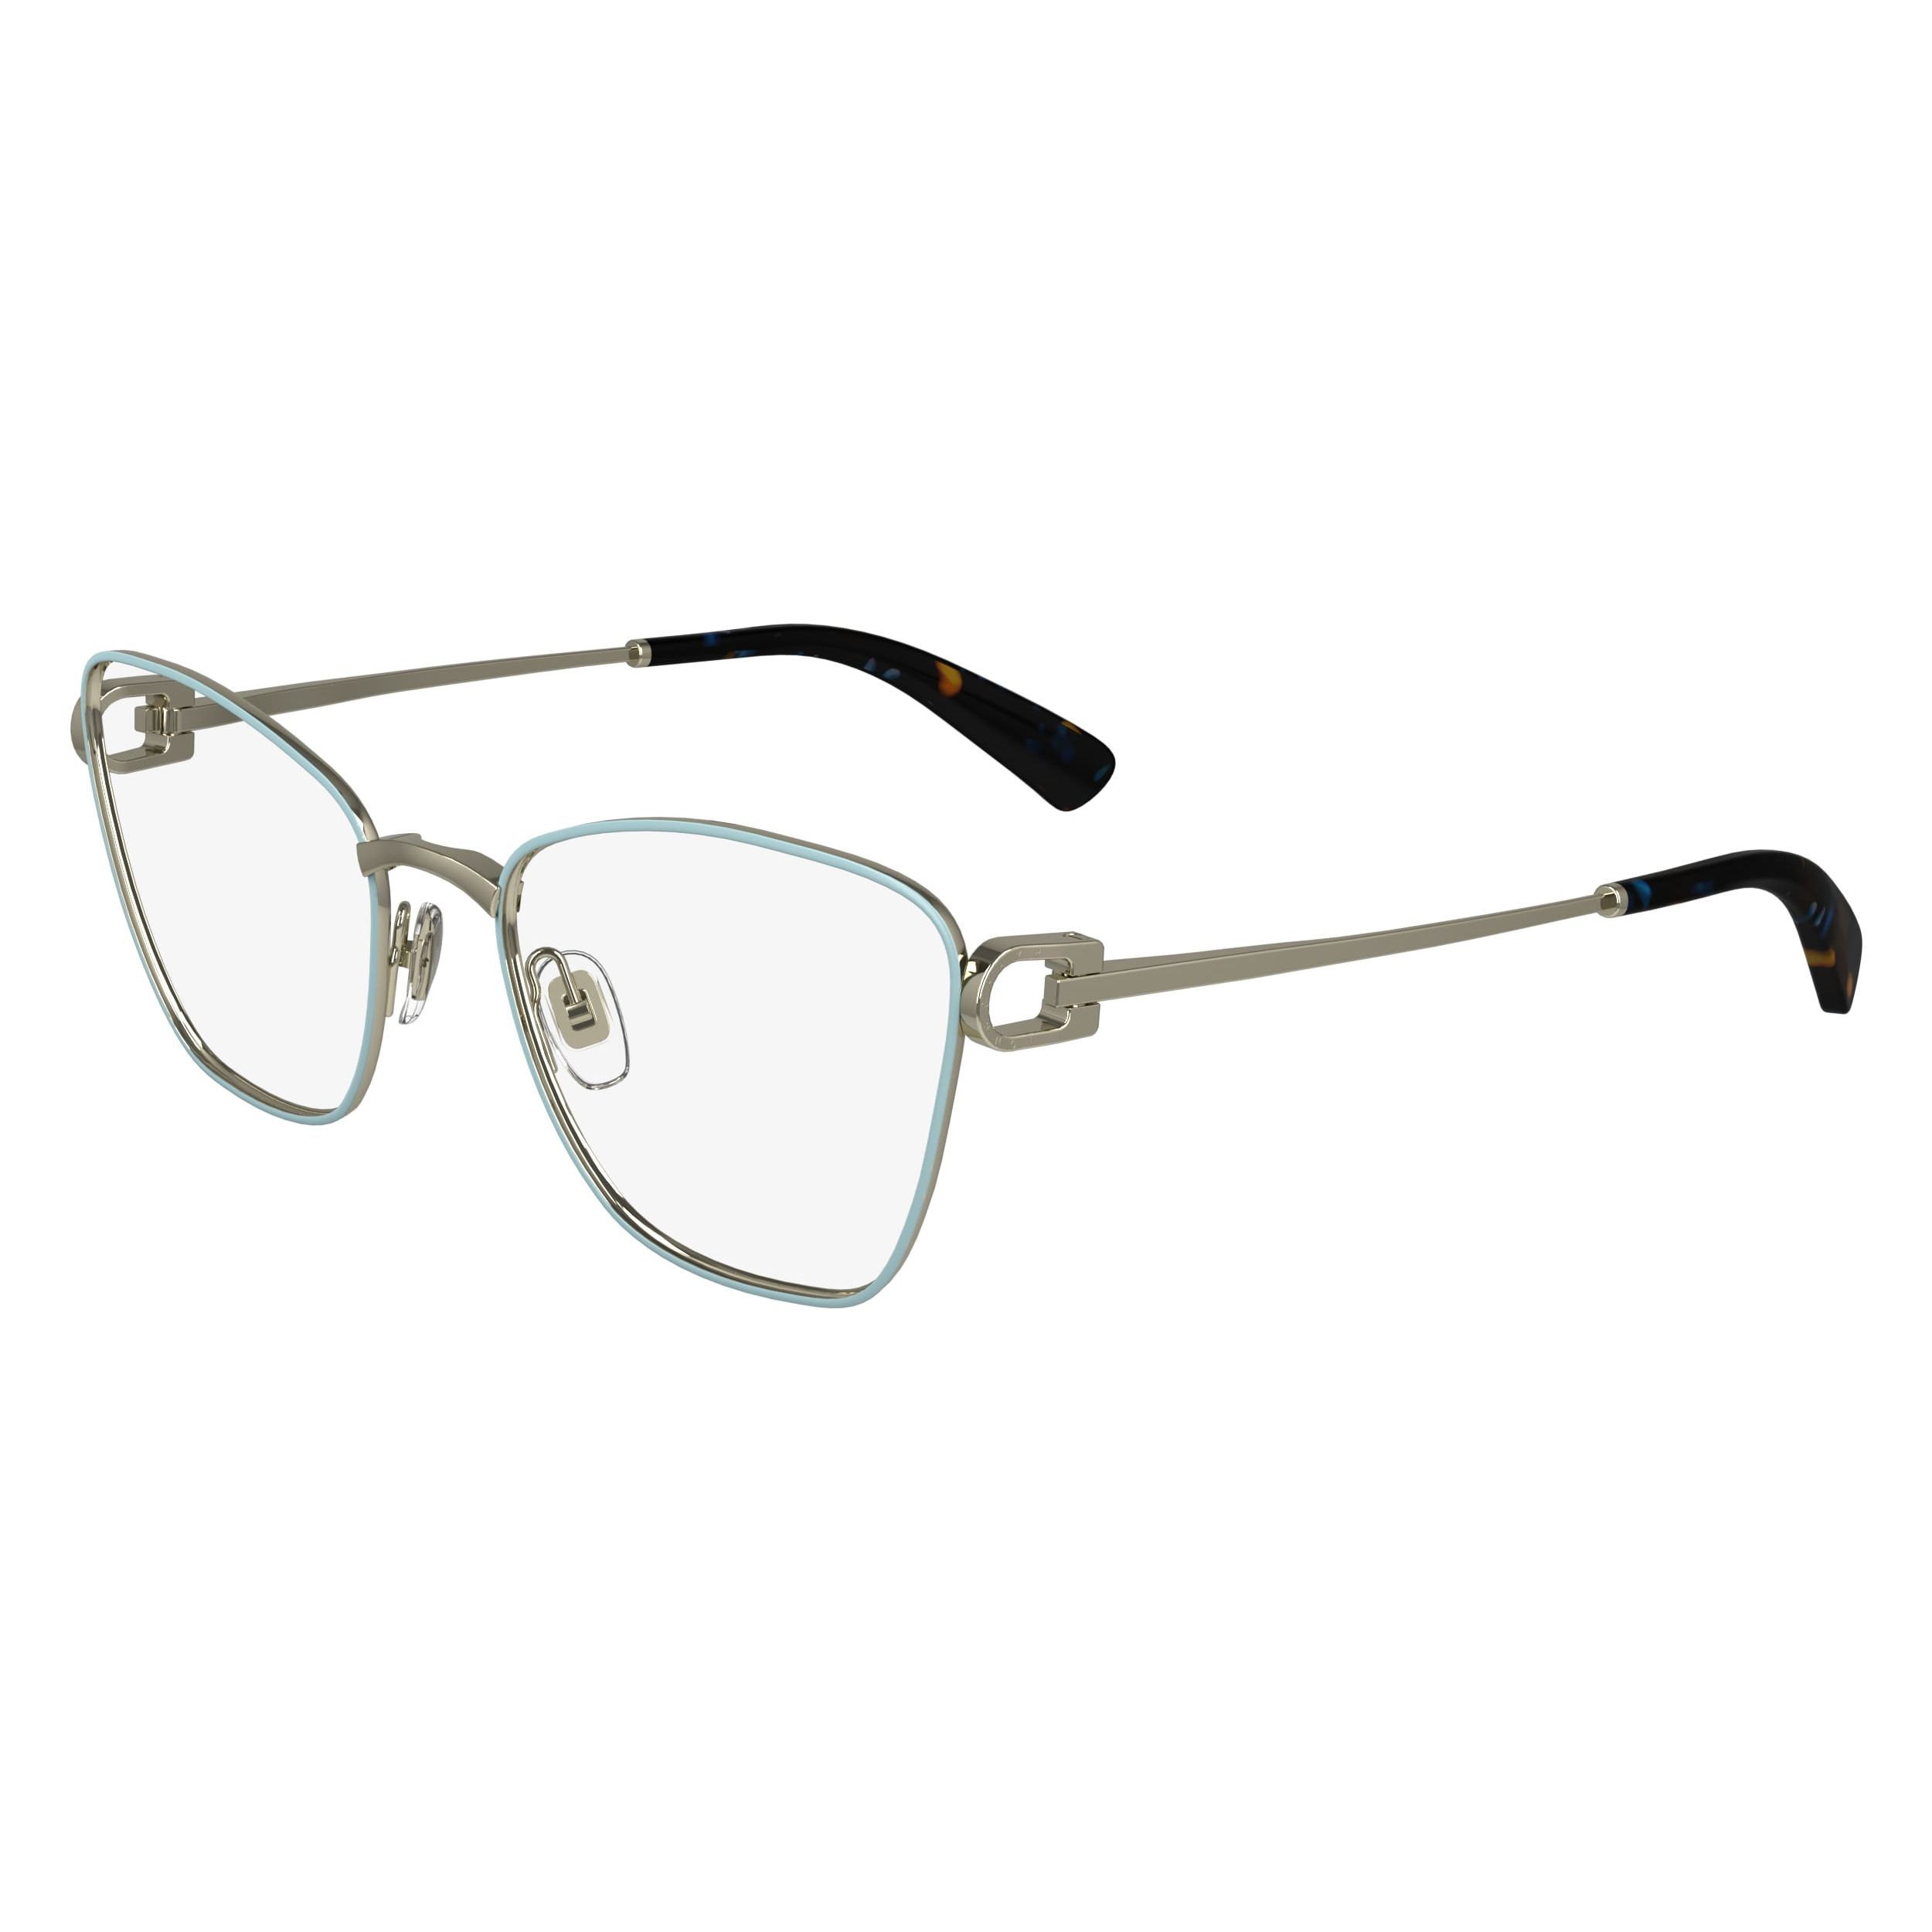 LO2162 Cat Eye Eyeglasses 712 - size 54